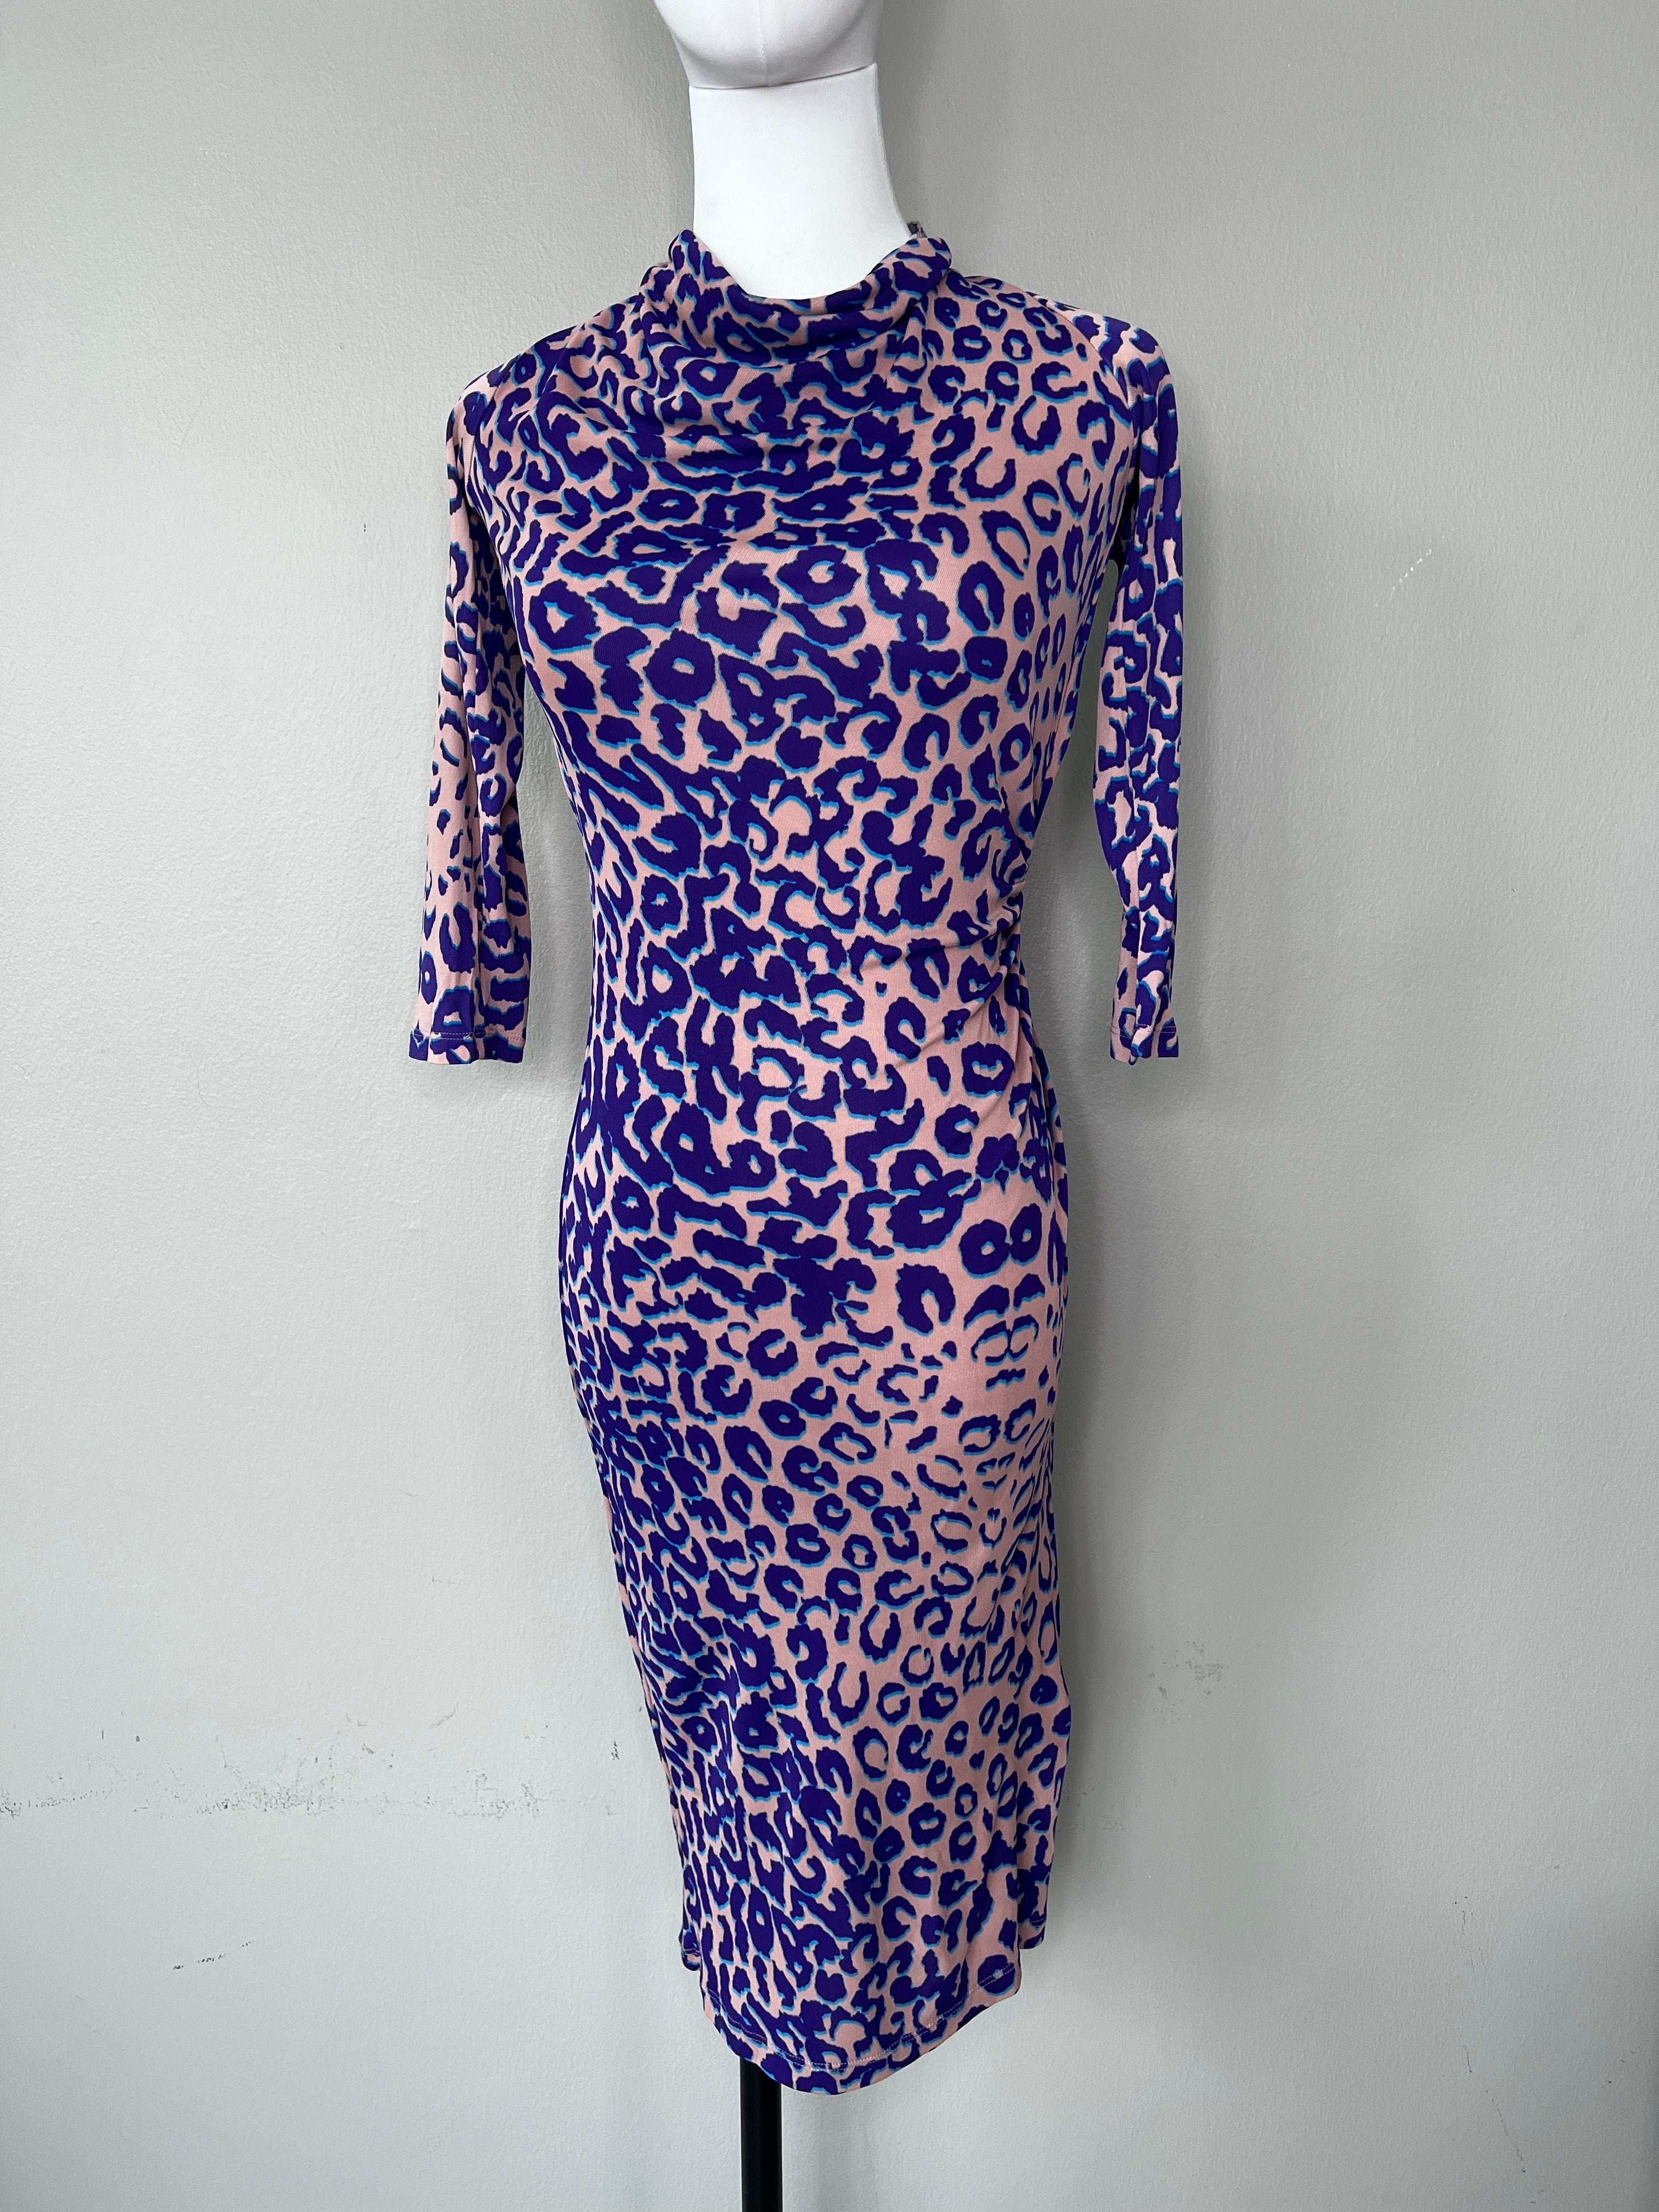 patterned purplish-nude knee length leopard dress that wraps your body - LK Bennett